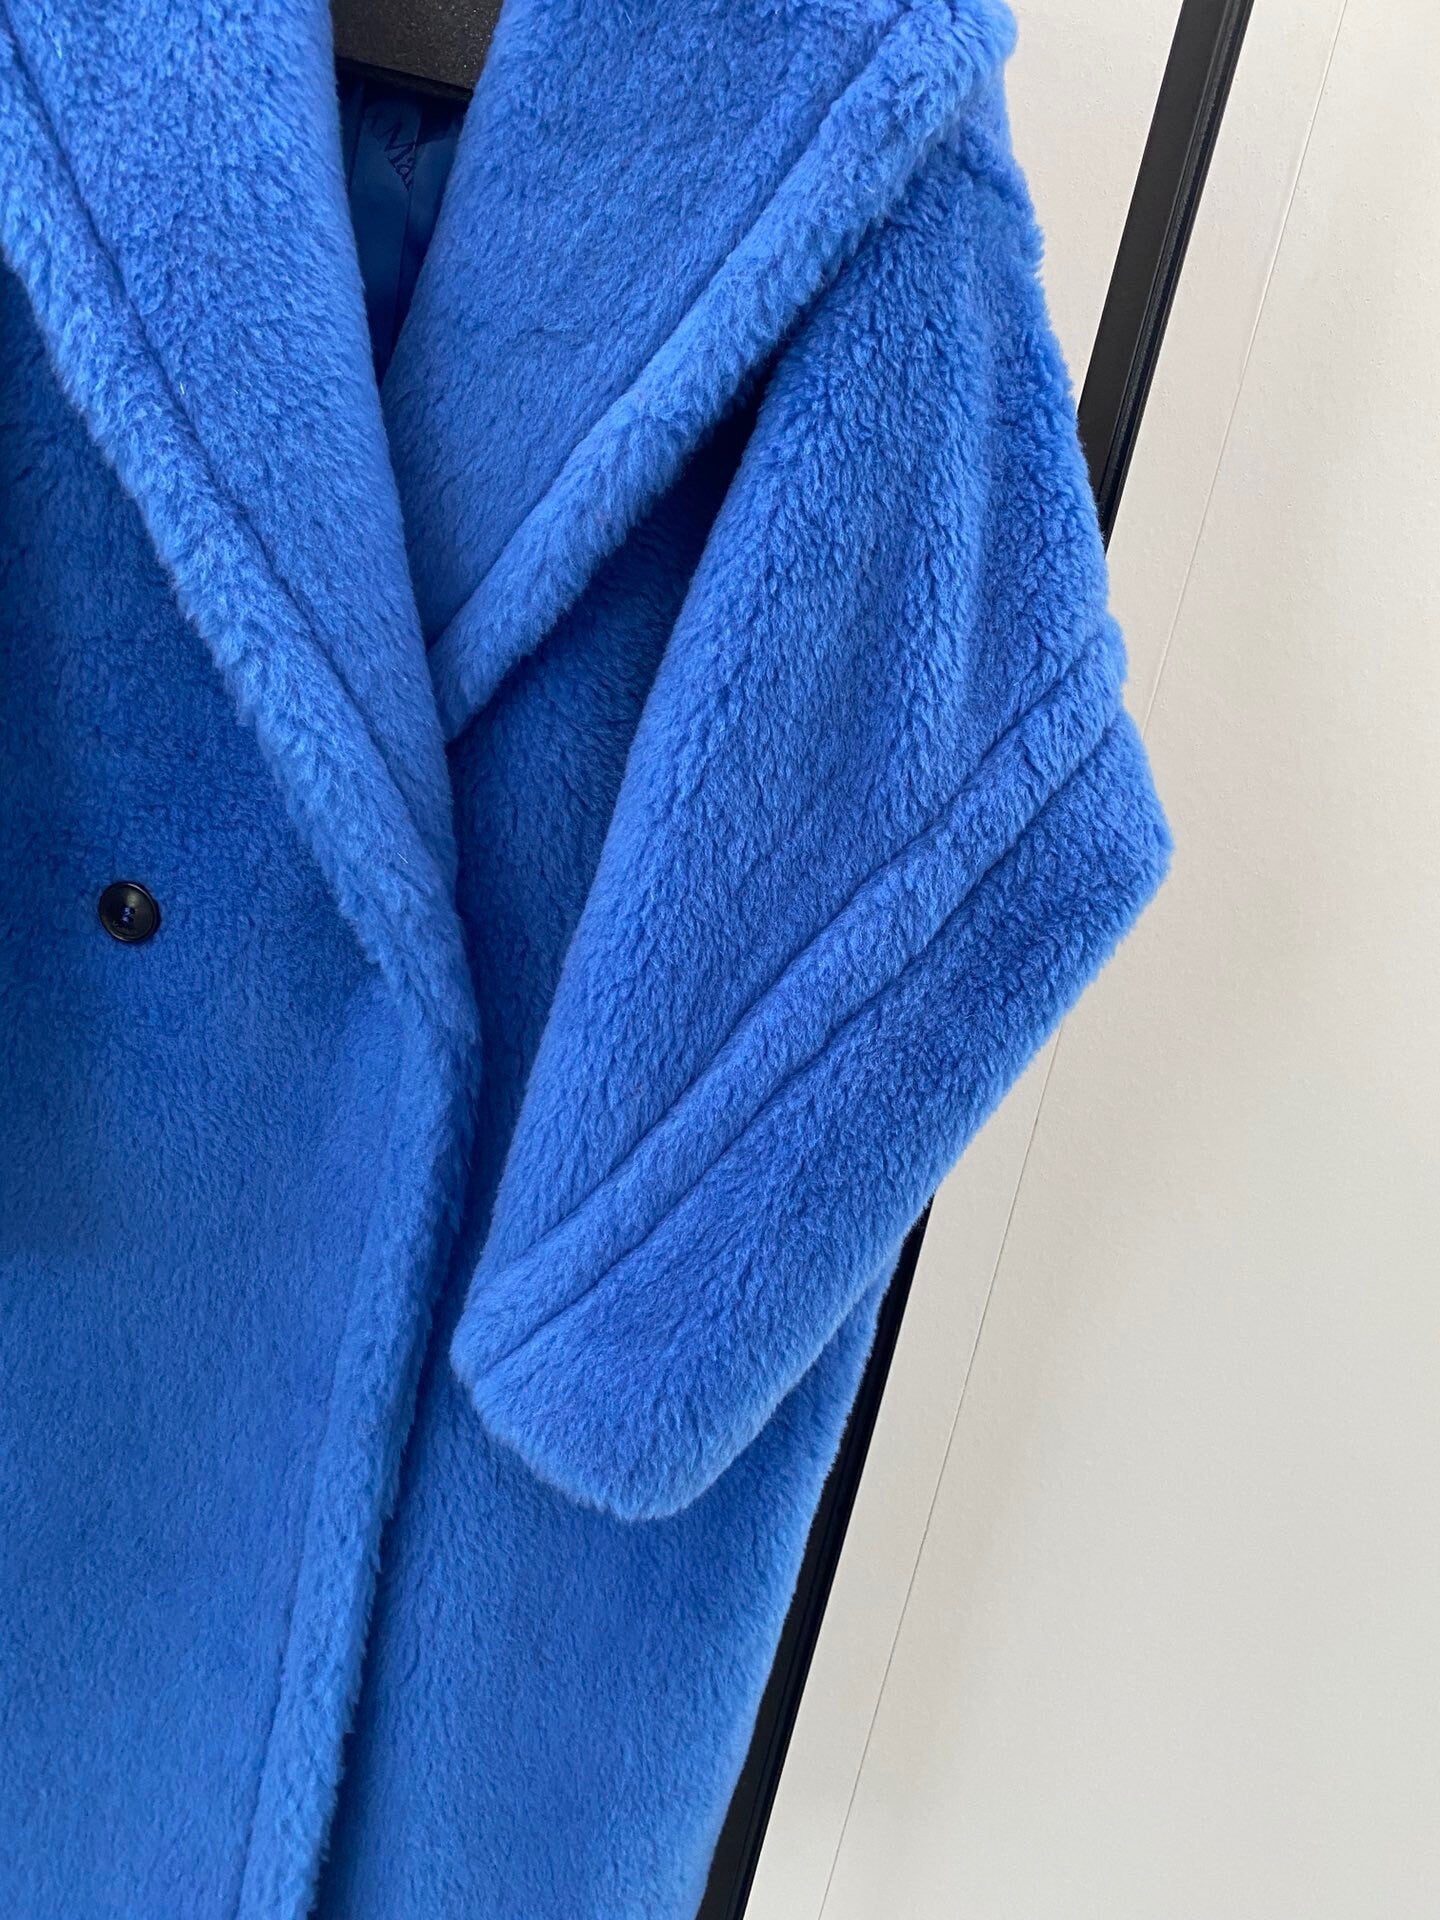 Wool Shearling Teddy Long Coat Loose fit oversized coat Royal Blue